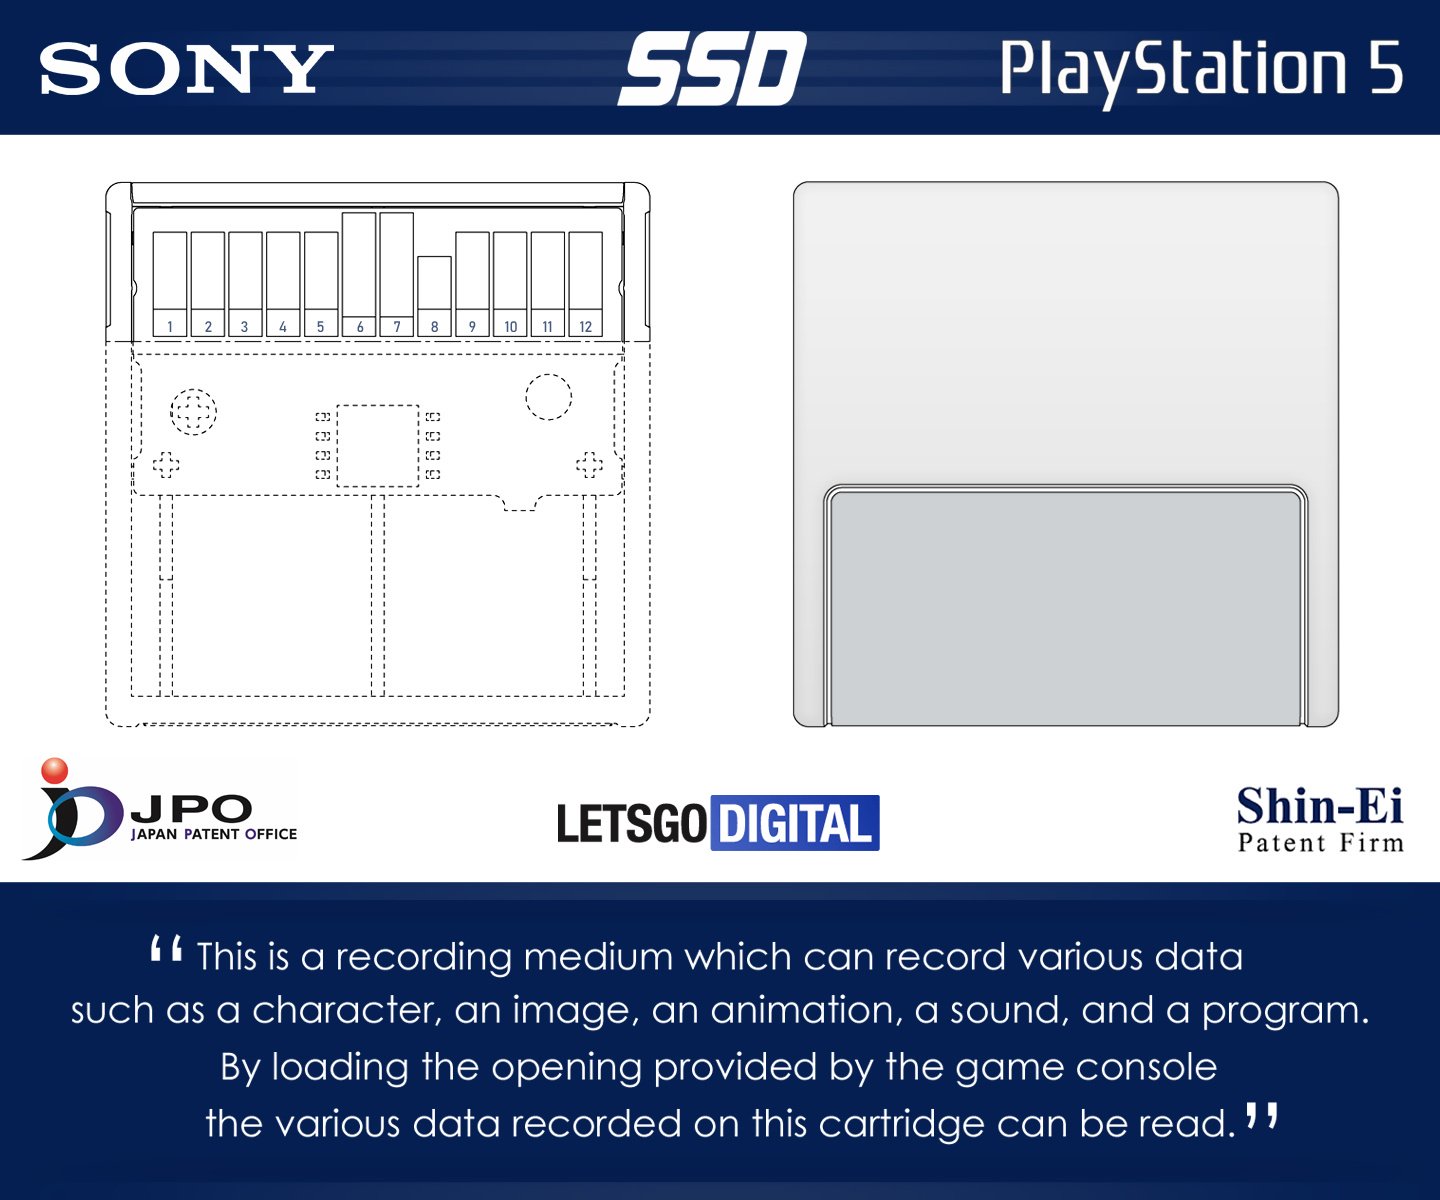 PlayStation 5 PS5-SSD-Speicherkassetten Japan Patent Image